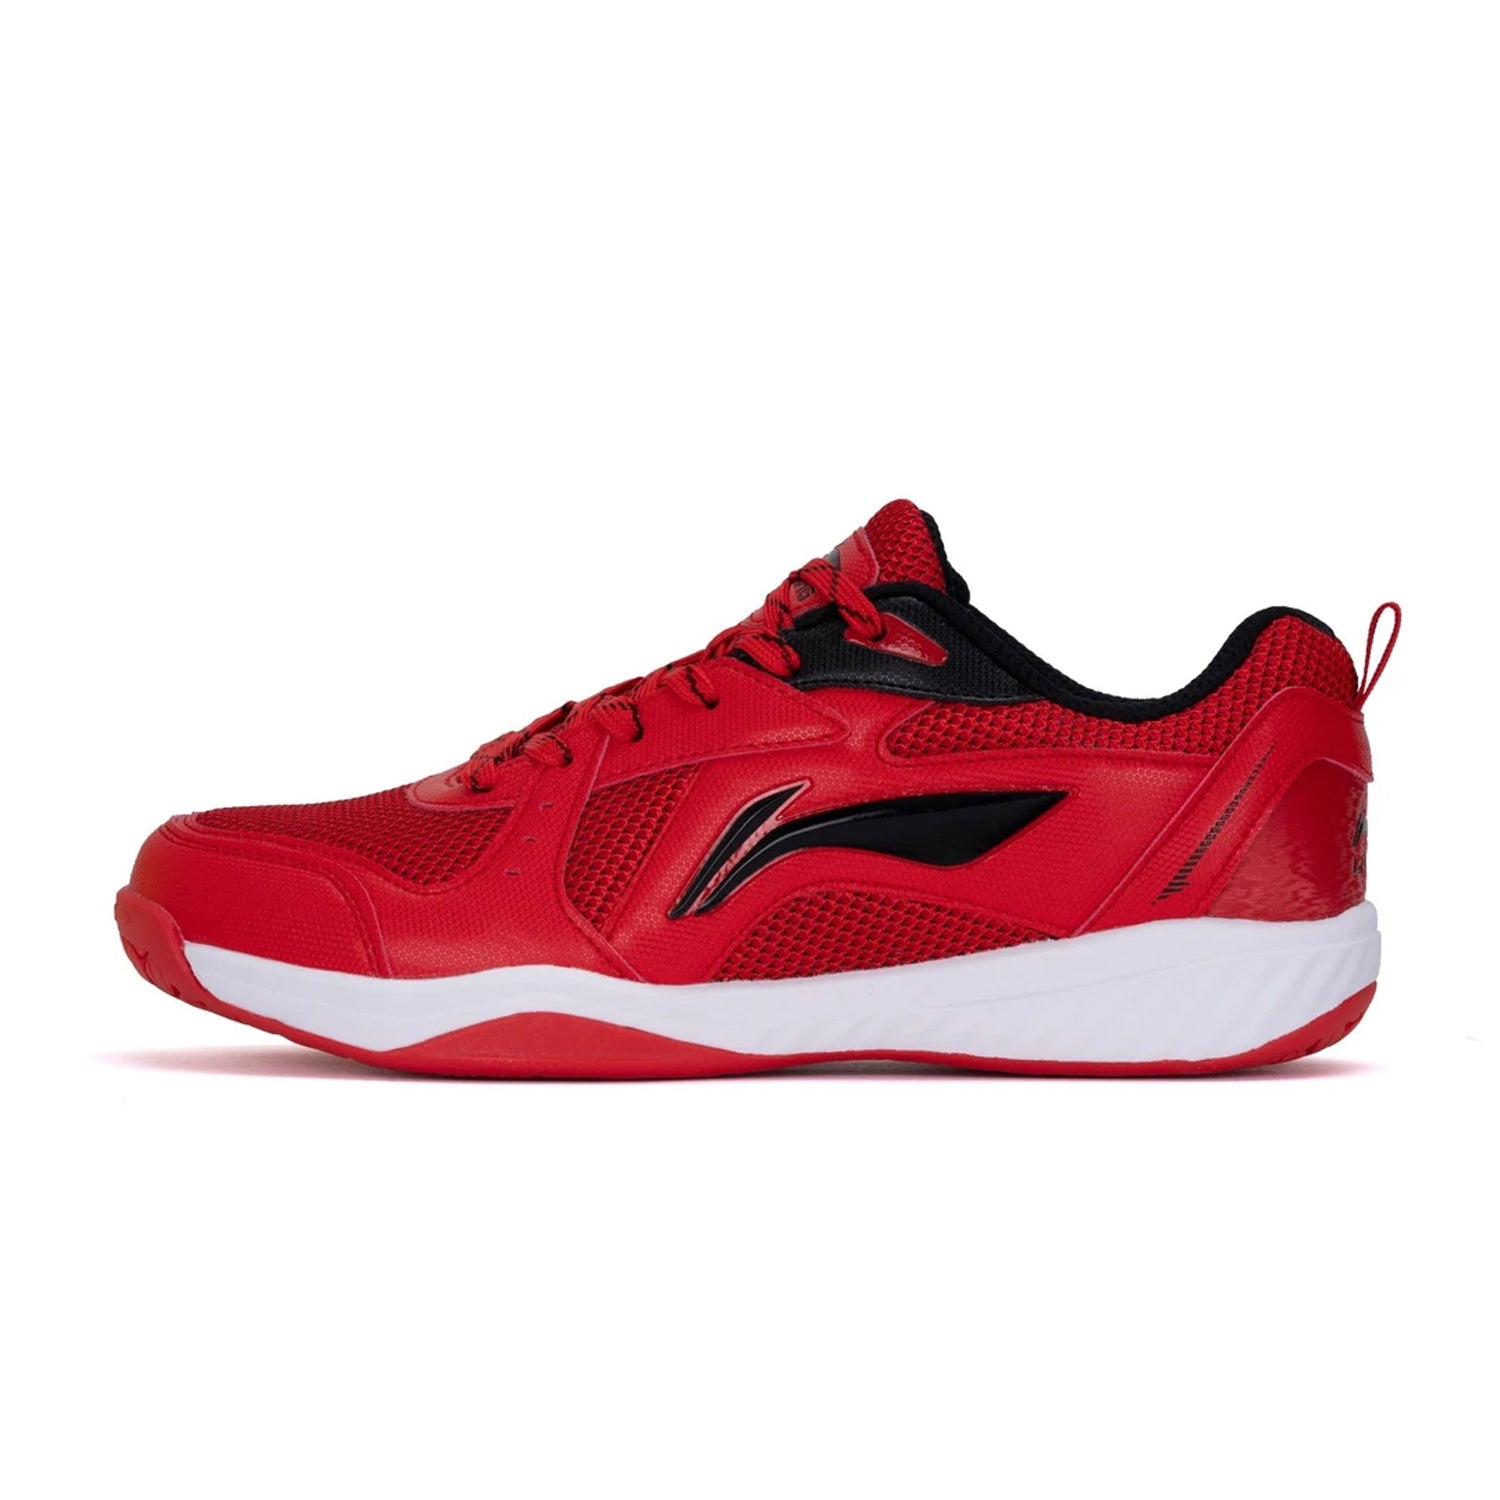 Li-Ning Ultra III Non Marking Badminton Shoe, Red/Black - Best Price online Prokicksports.com